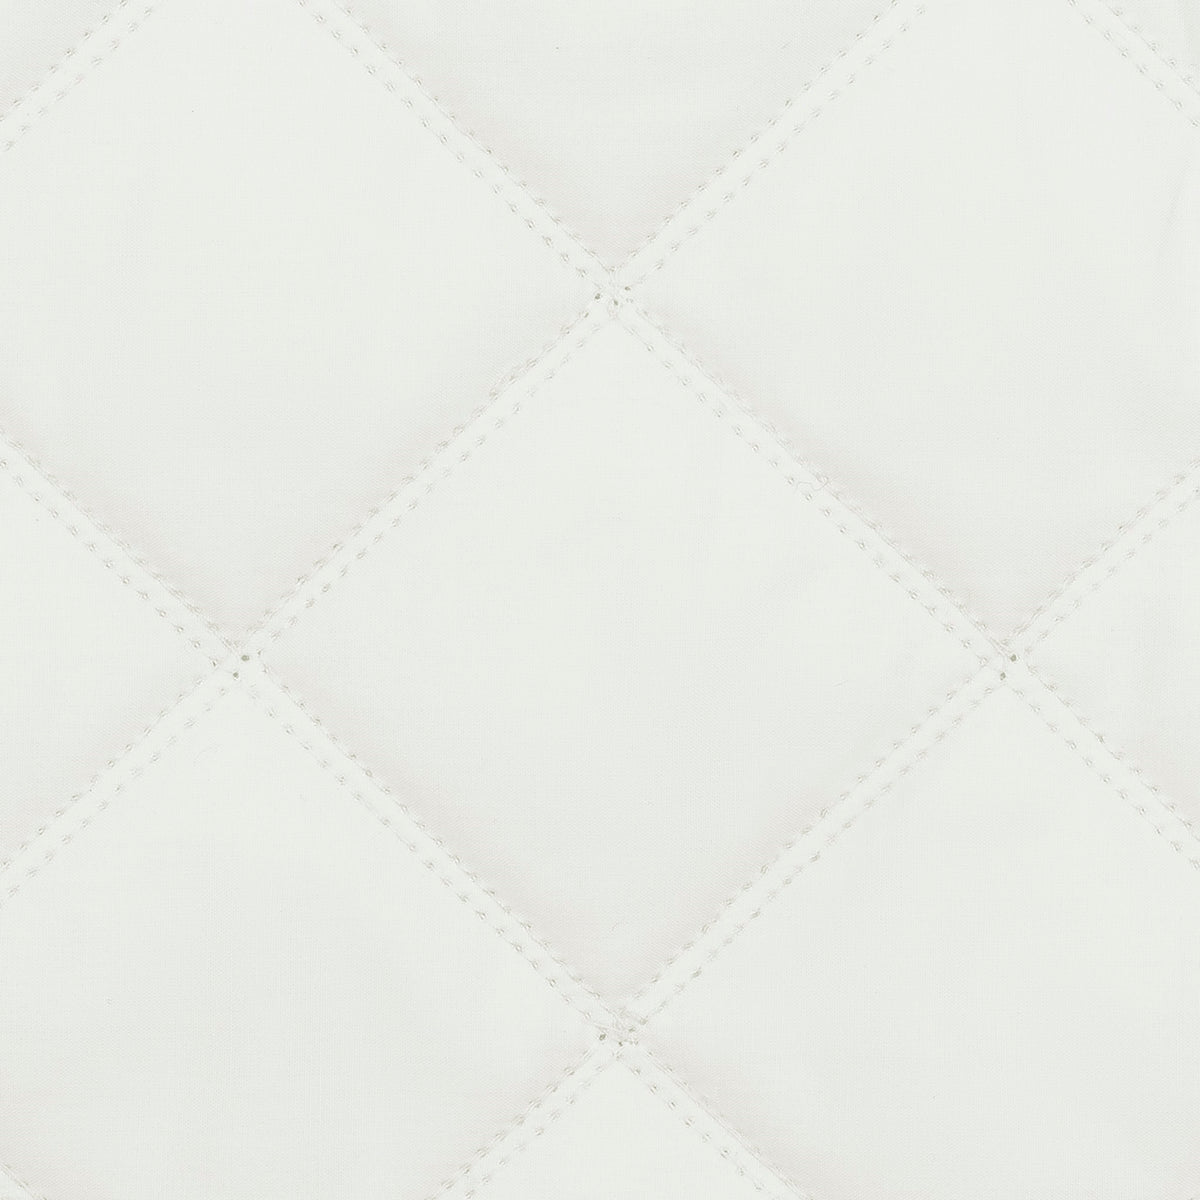 Swatch Sample of Matouk Milano Quilt Bedding in Color Bone